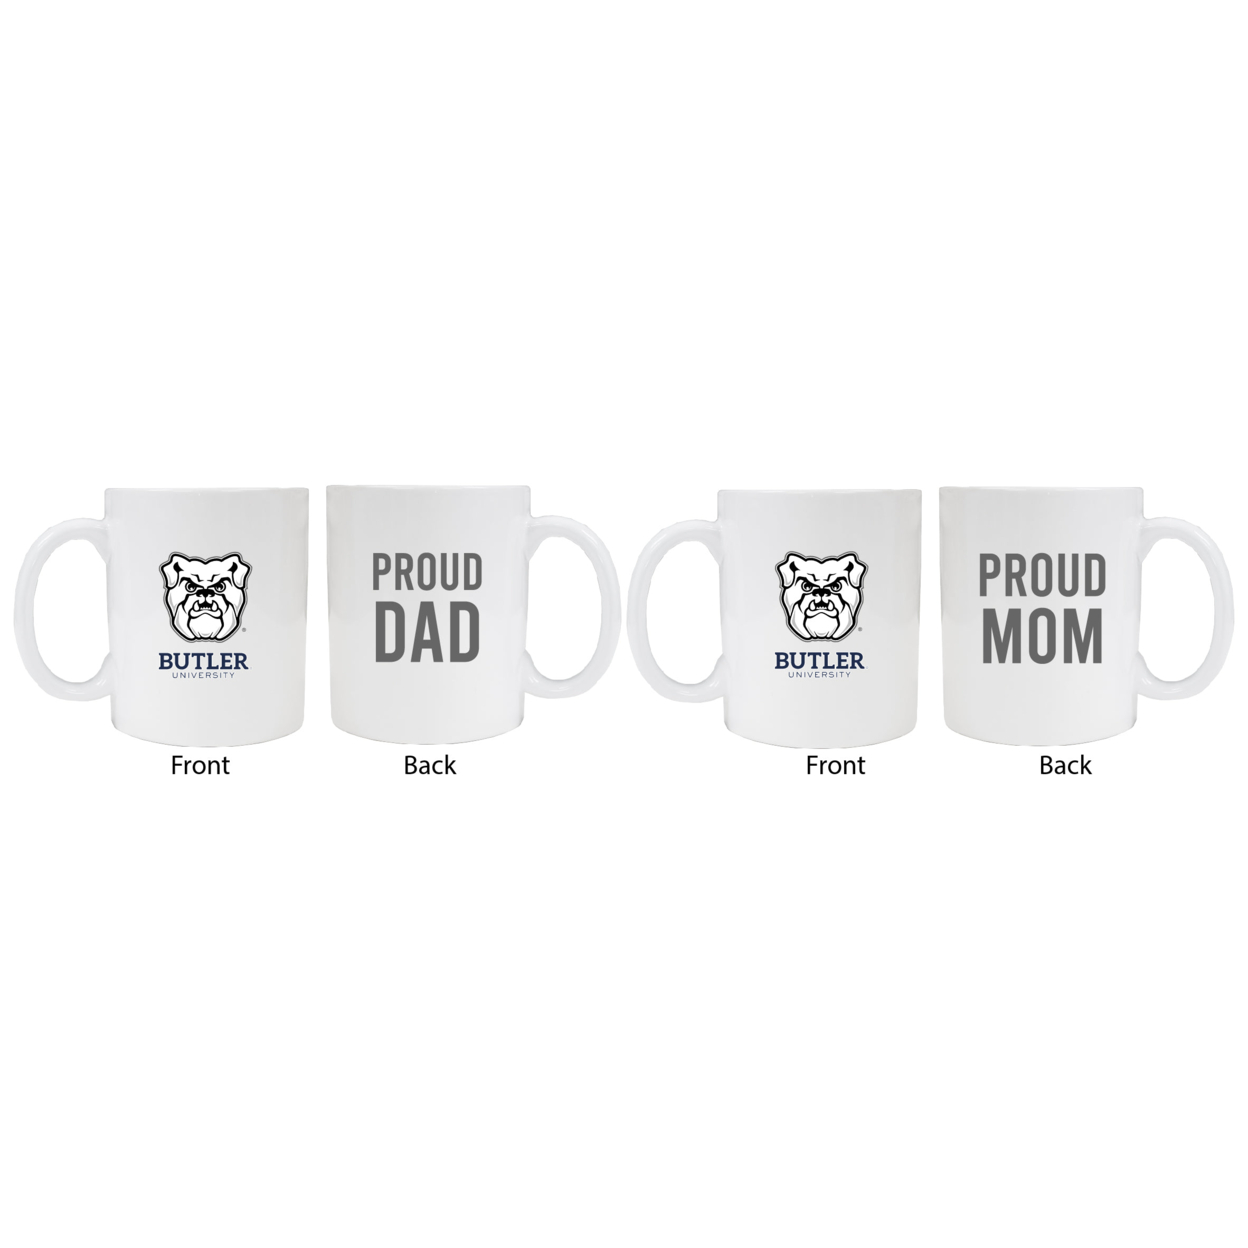 Butler Bulldogs Proud Mom And Dad White Ceramic Coffee Mug 2 Pack (White).